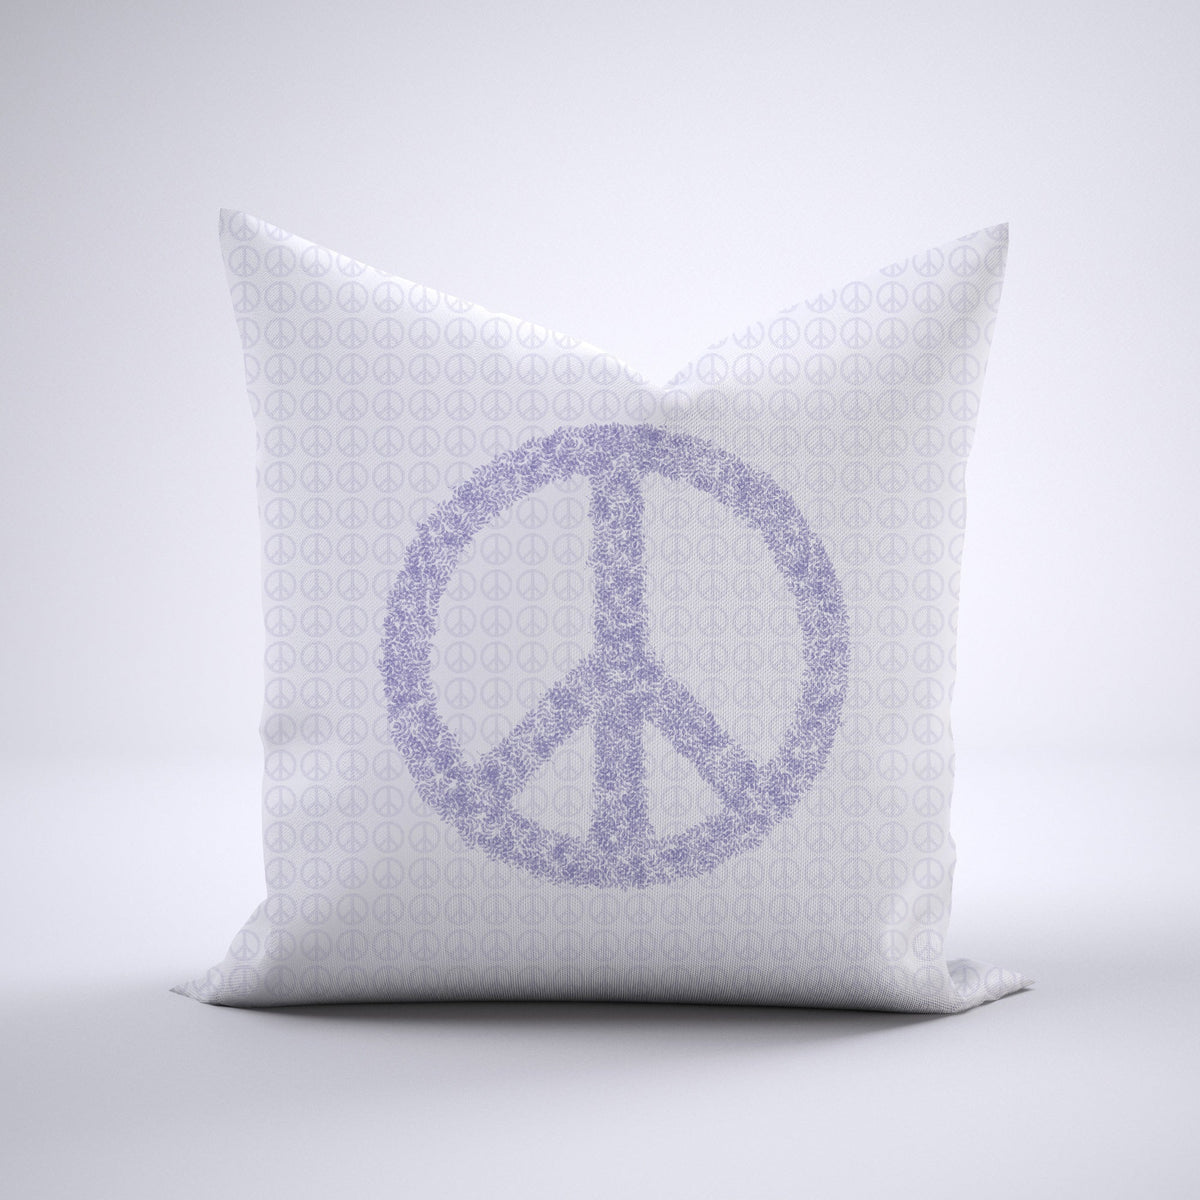 Throw Pillow - All-Over Peace Lavender Bedding, Pillows, Throw Pillows MWW 